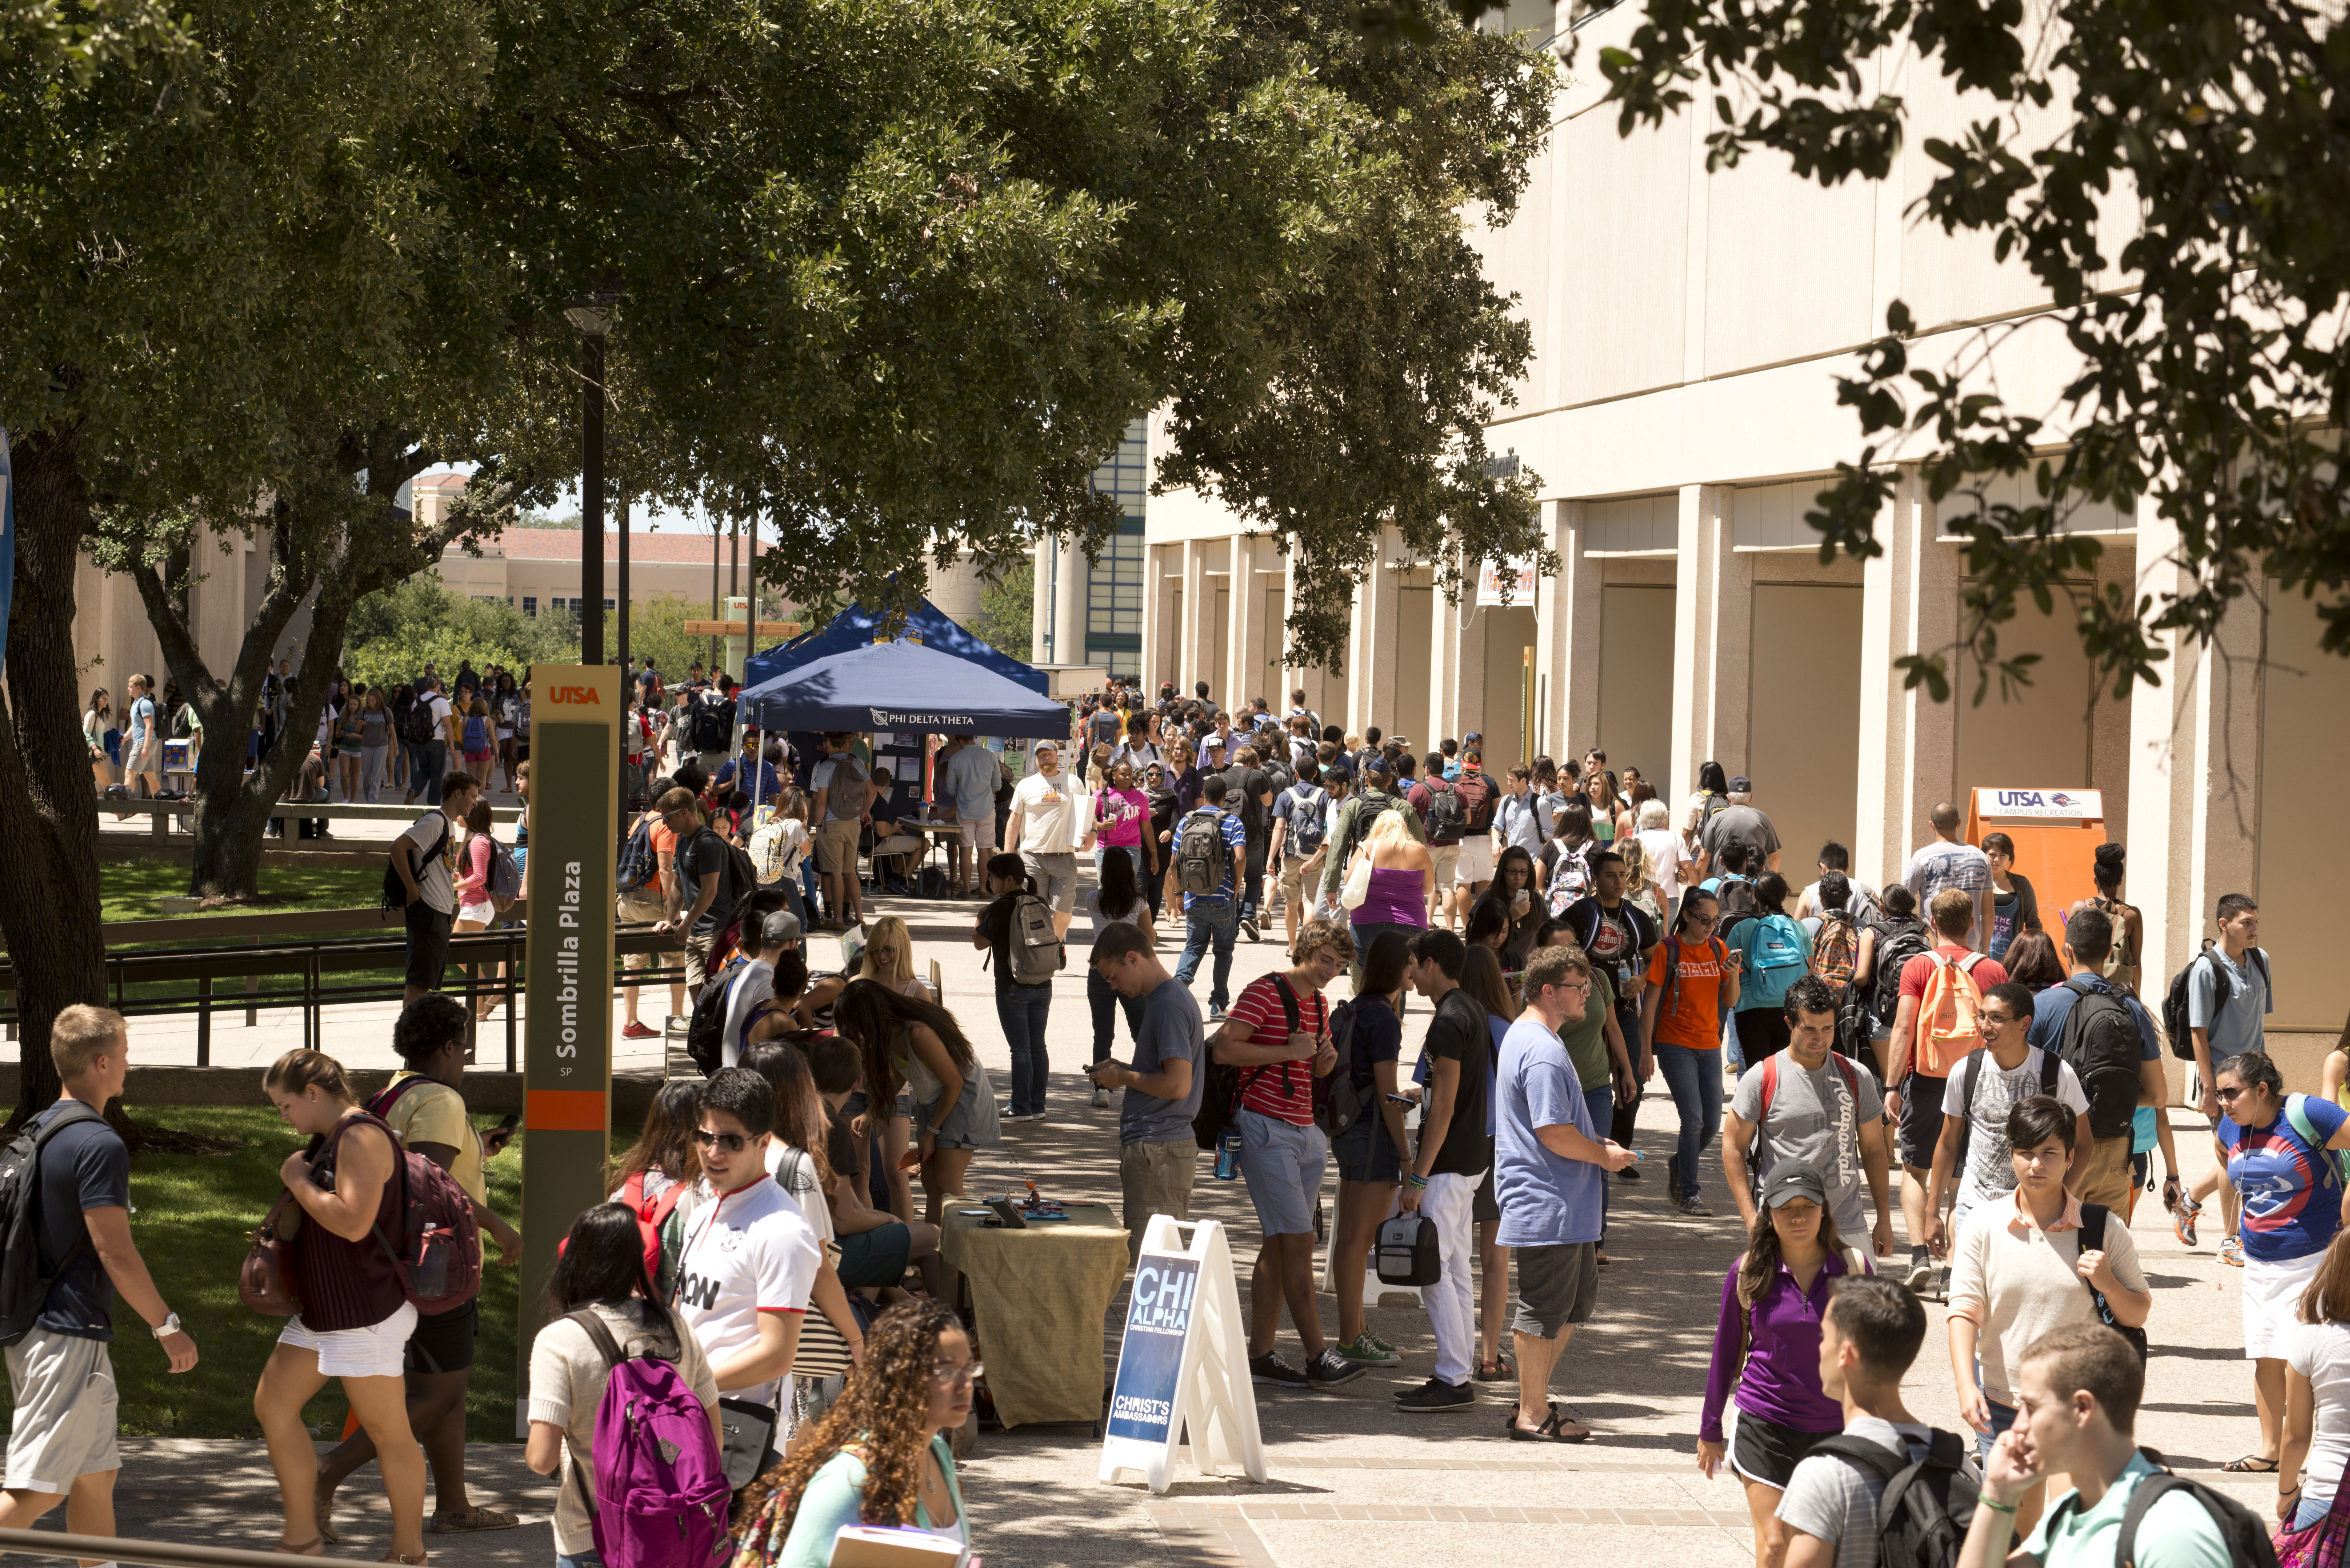 Strategies for California? Texas university helps students cross finish line